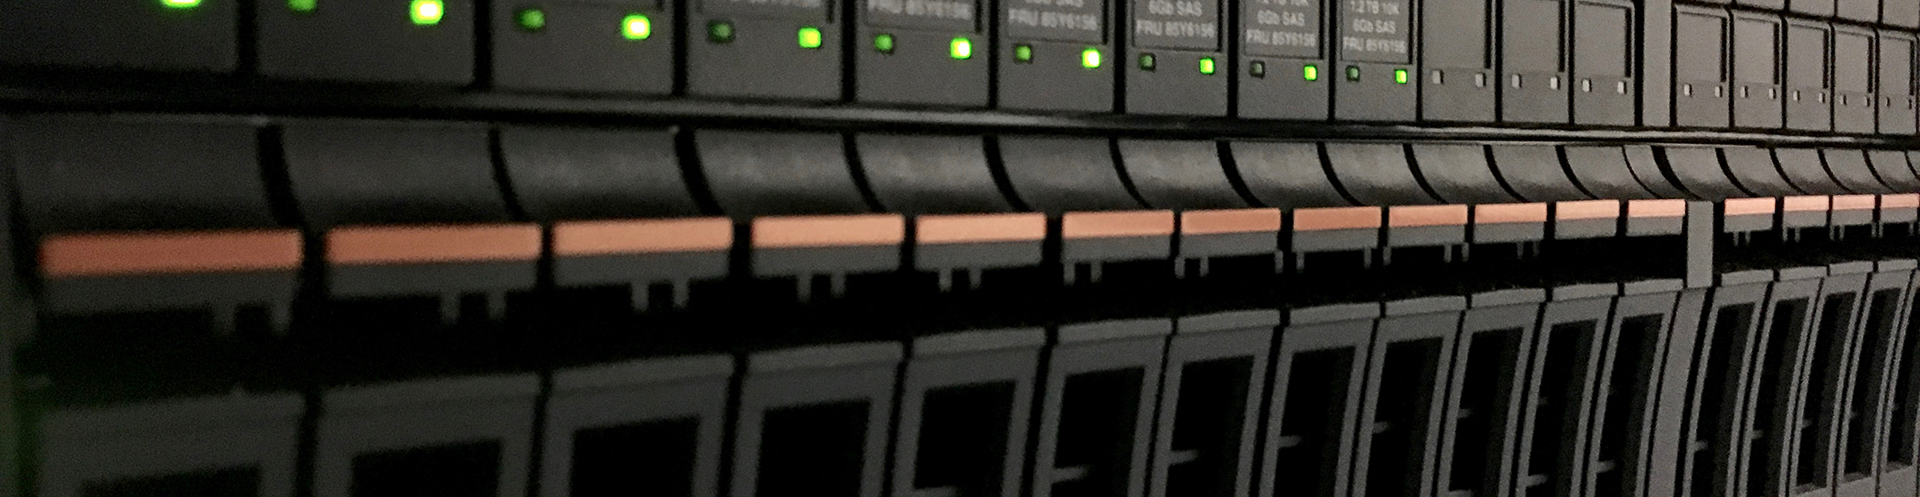 image of computer front bezel